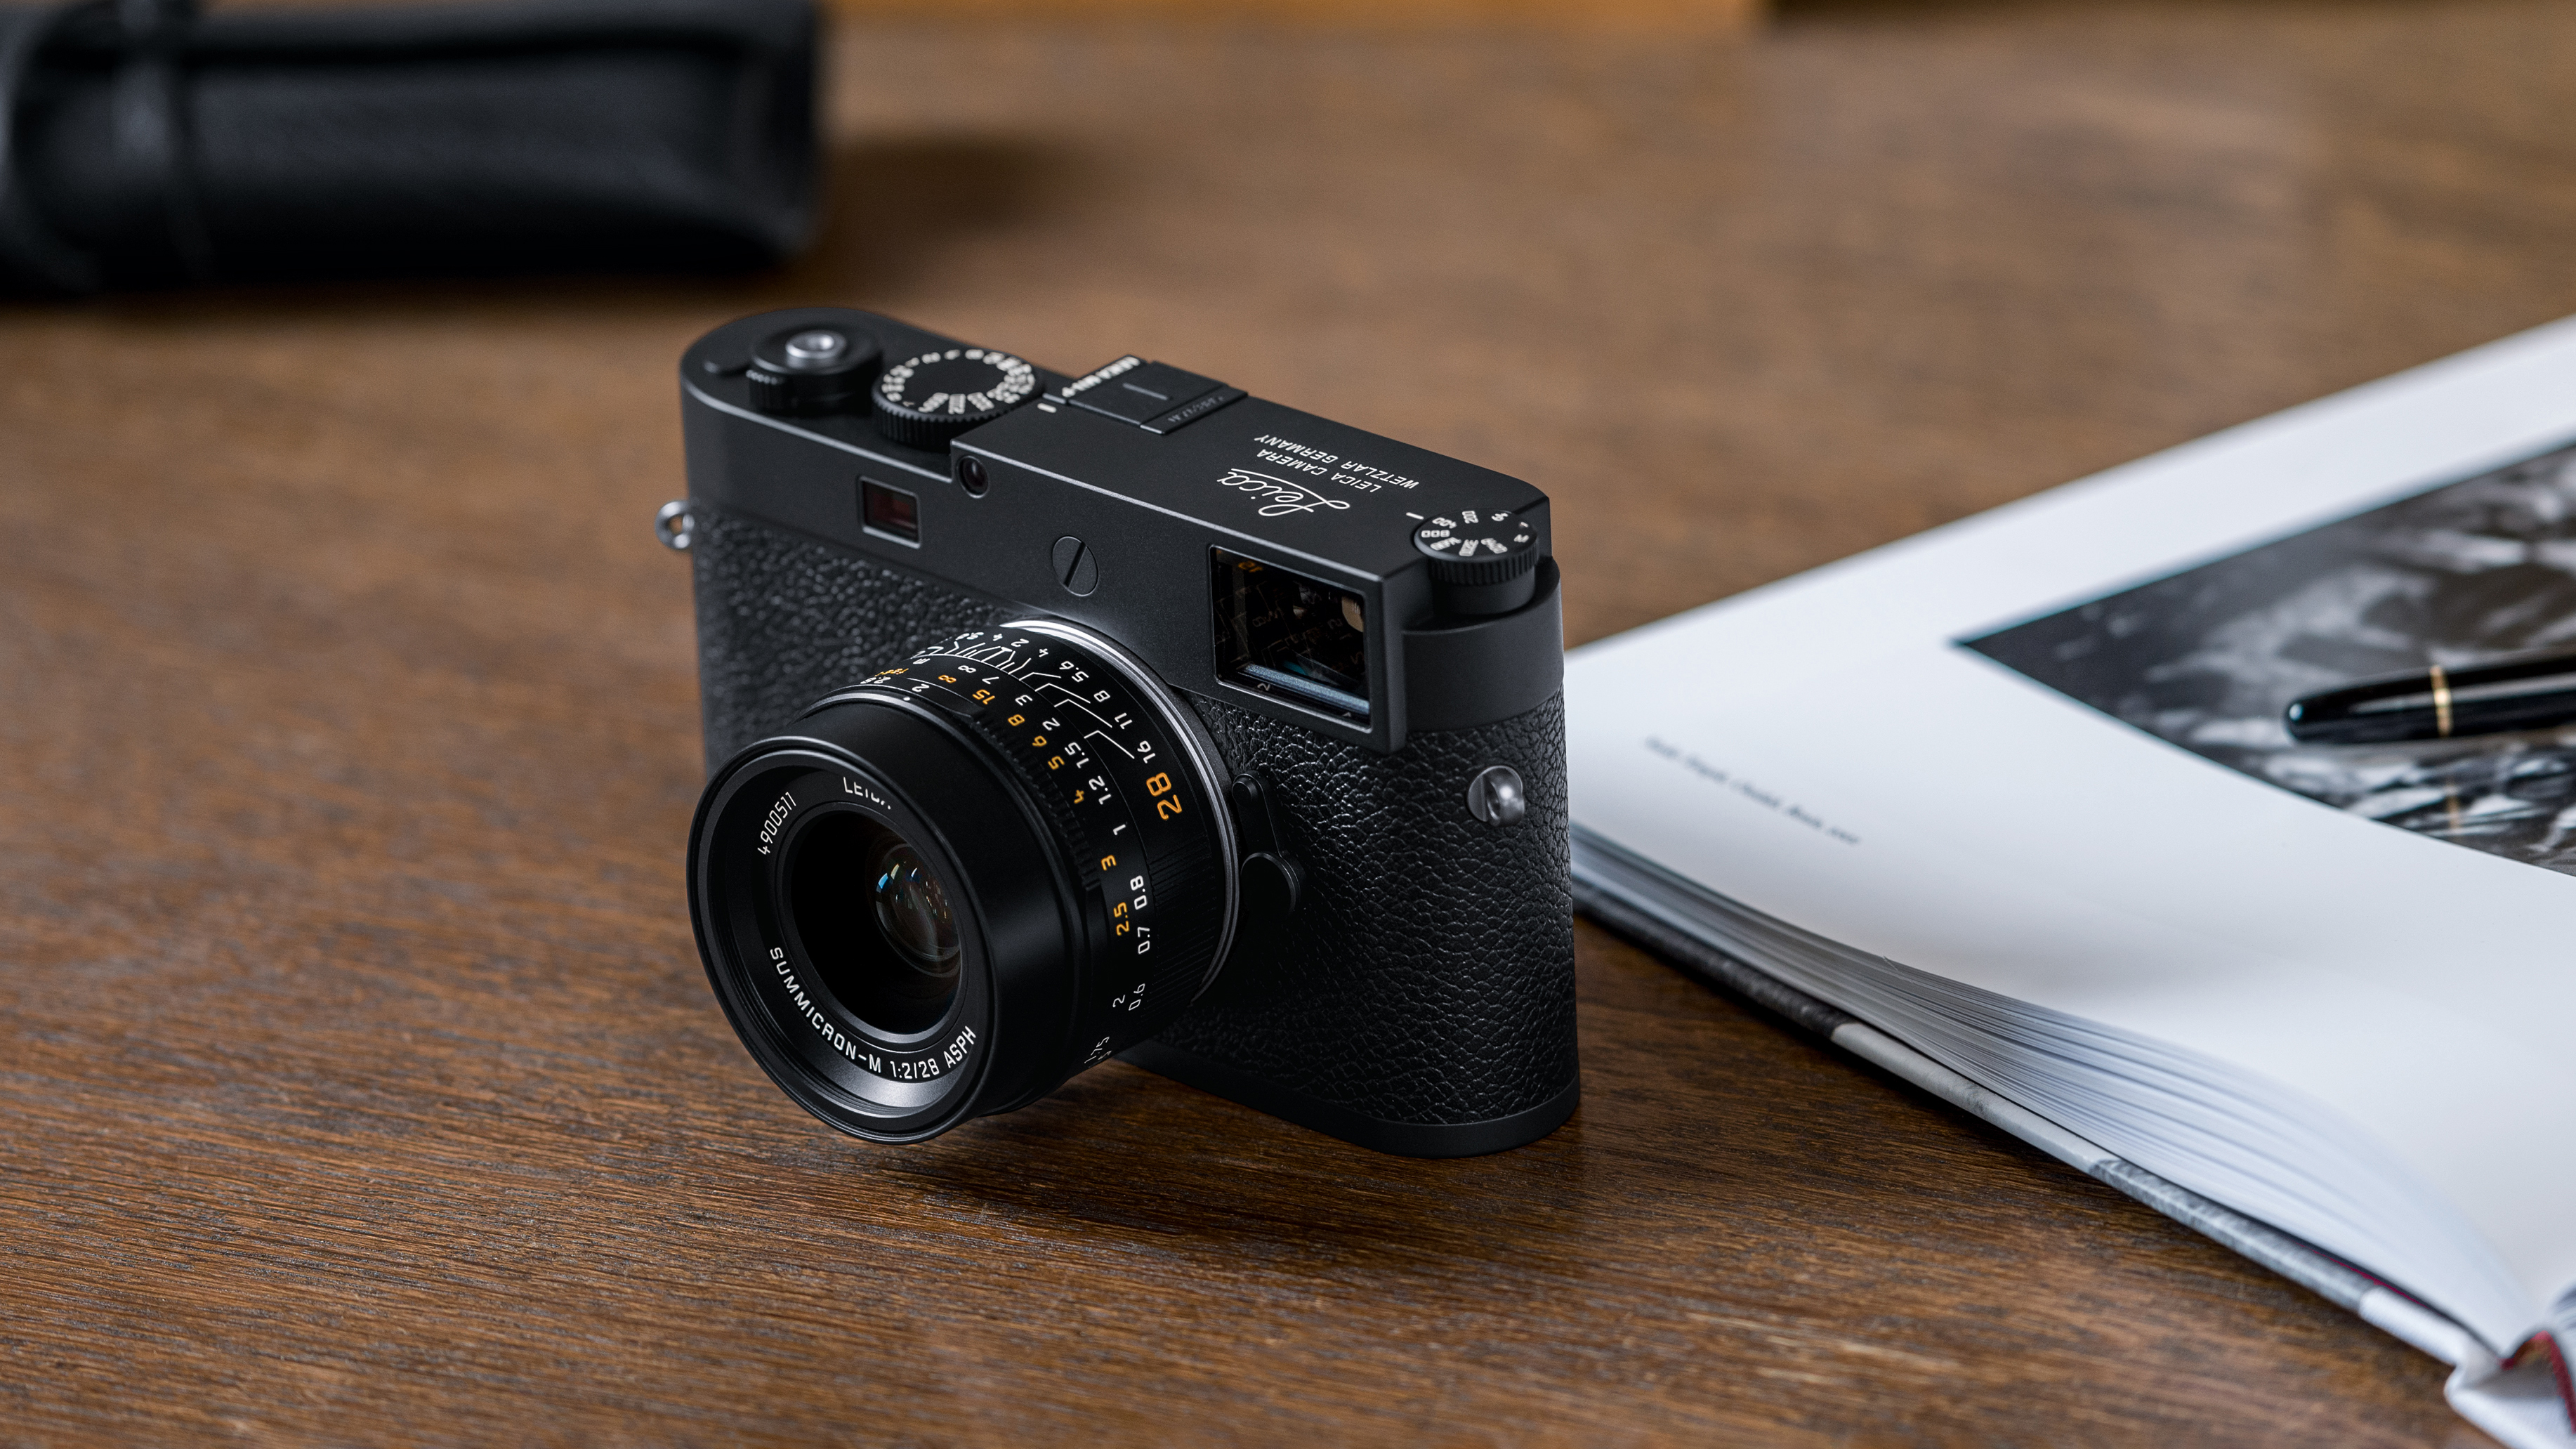 8 Megapixel Leica D-Lux 2 in Australia - Reviewed